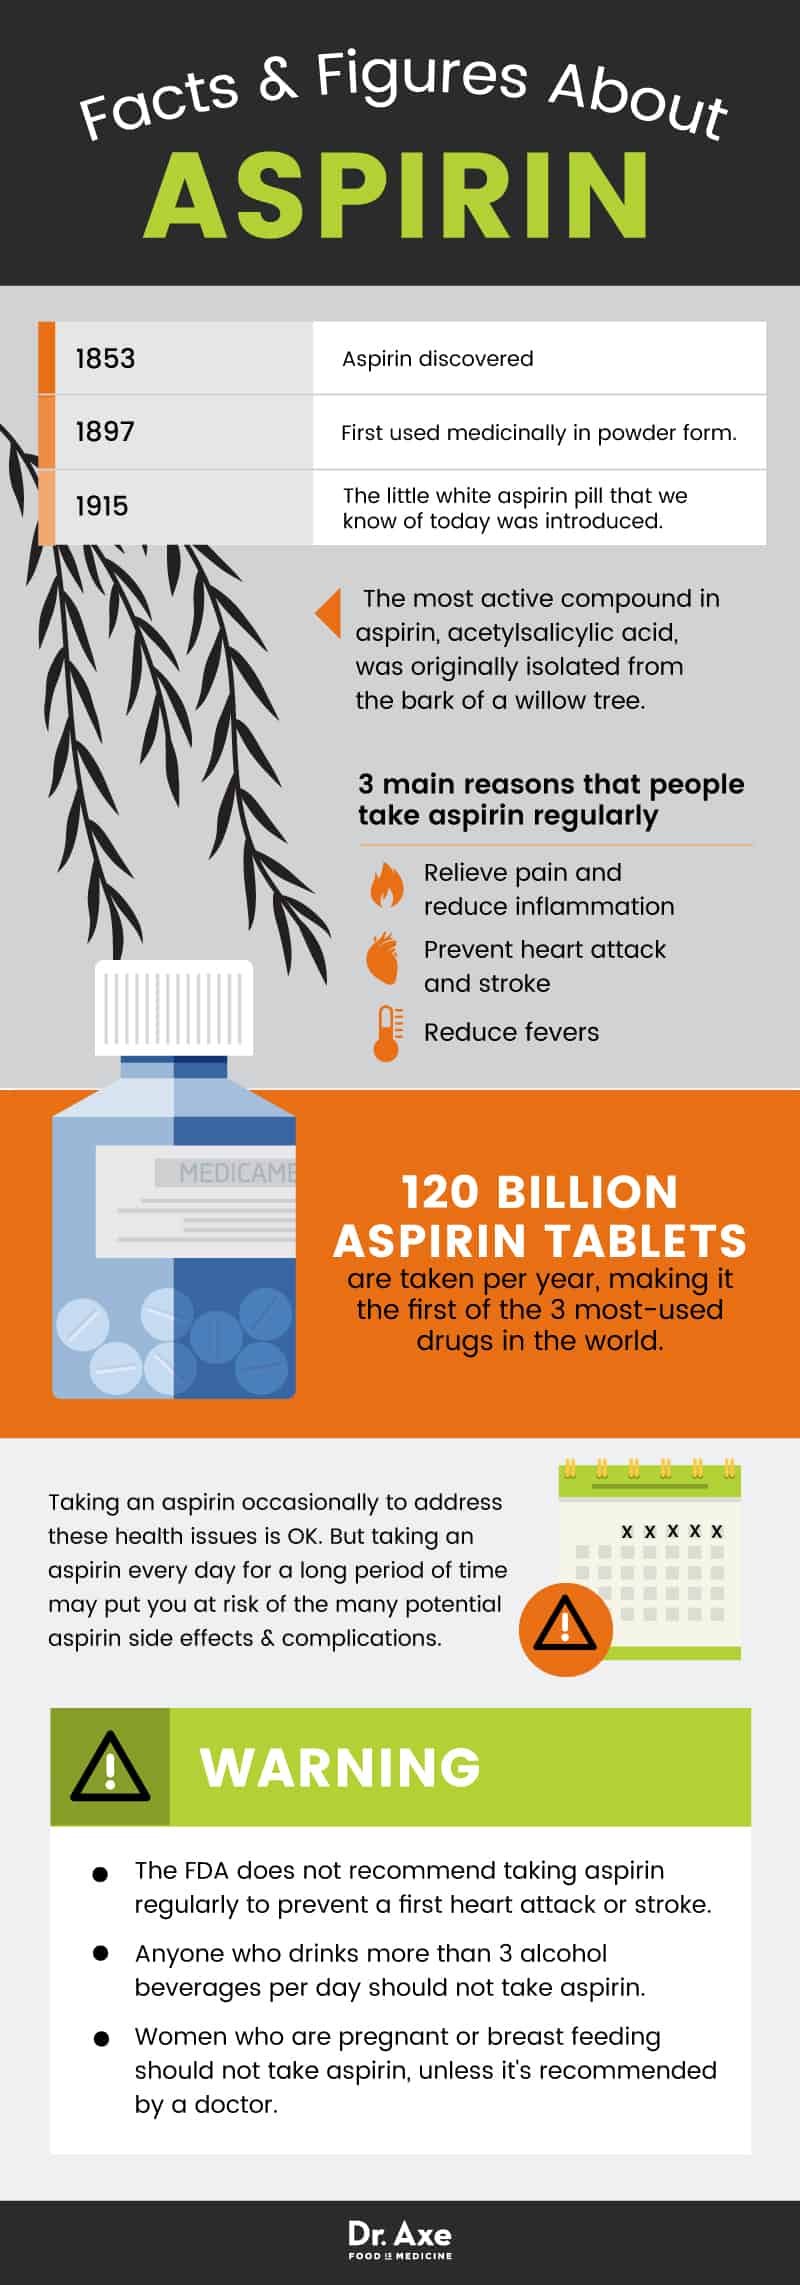 Efecte secundare ale aspirinei: fapte despre aspirină - Dr. Axe